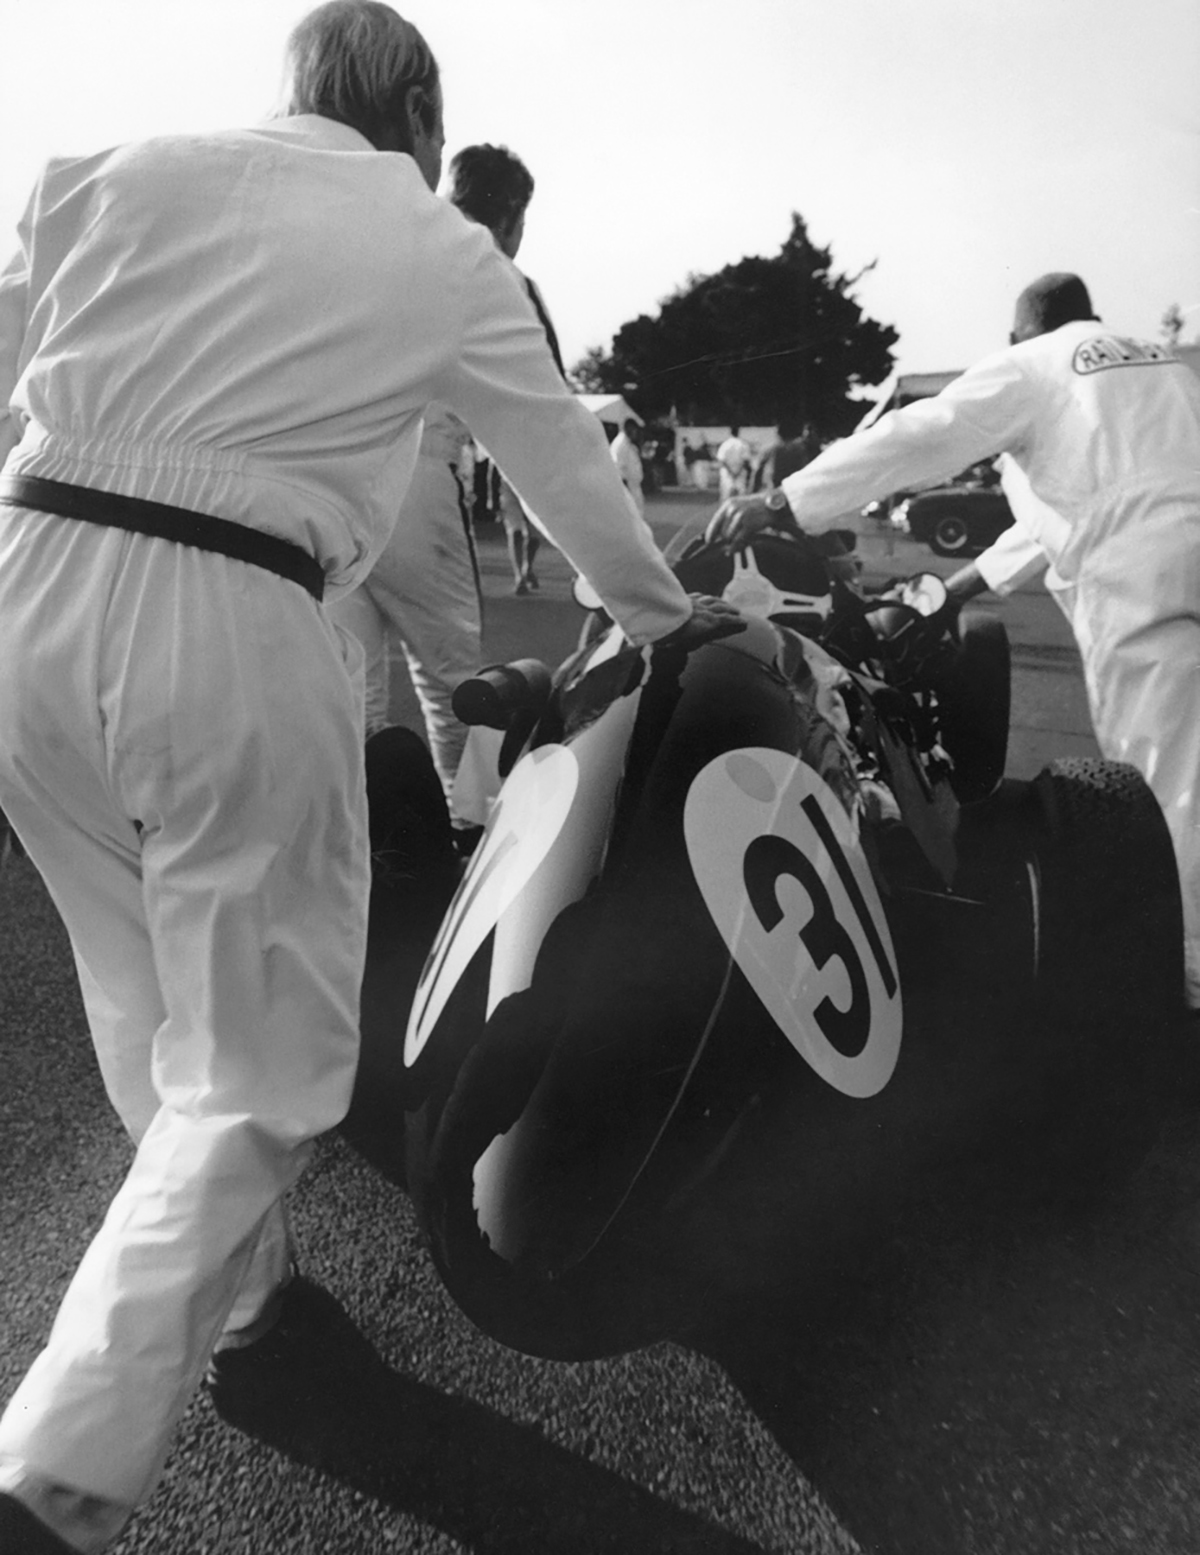 Racing team push off vintage racing car